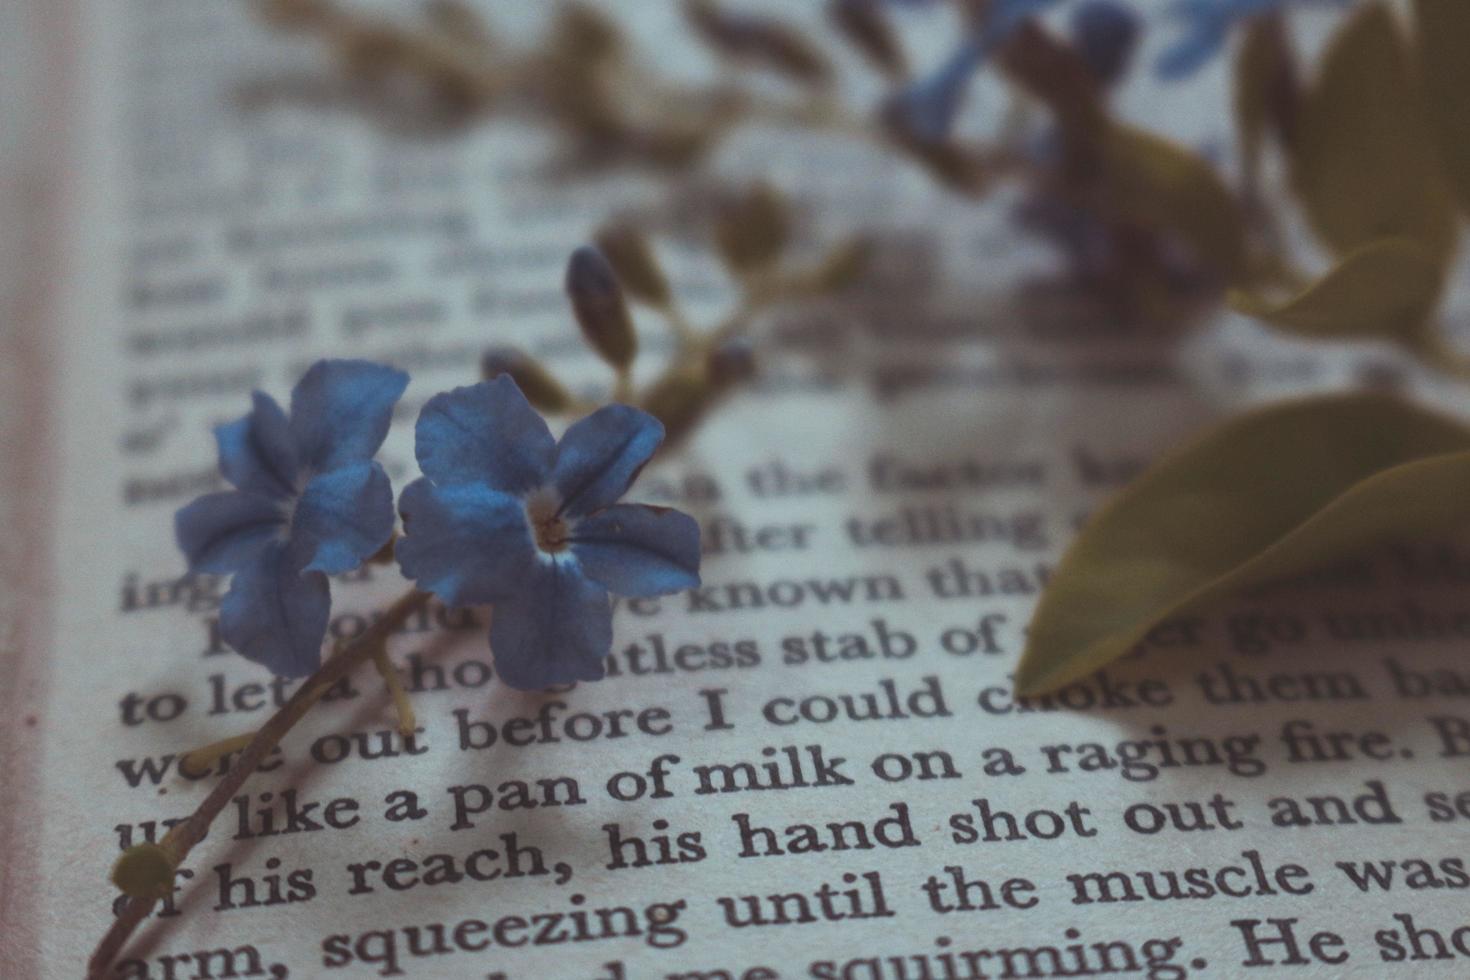 klein Purper bloemen in oud wijnoogst boek foto